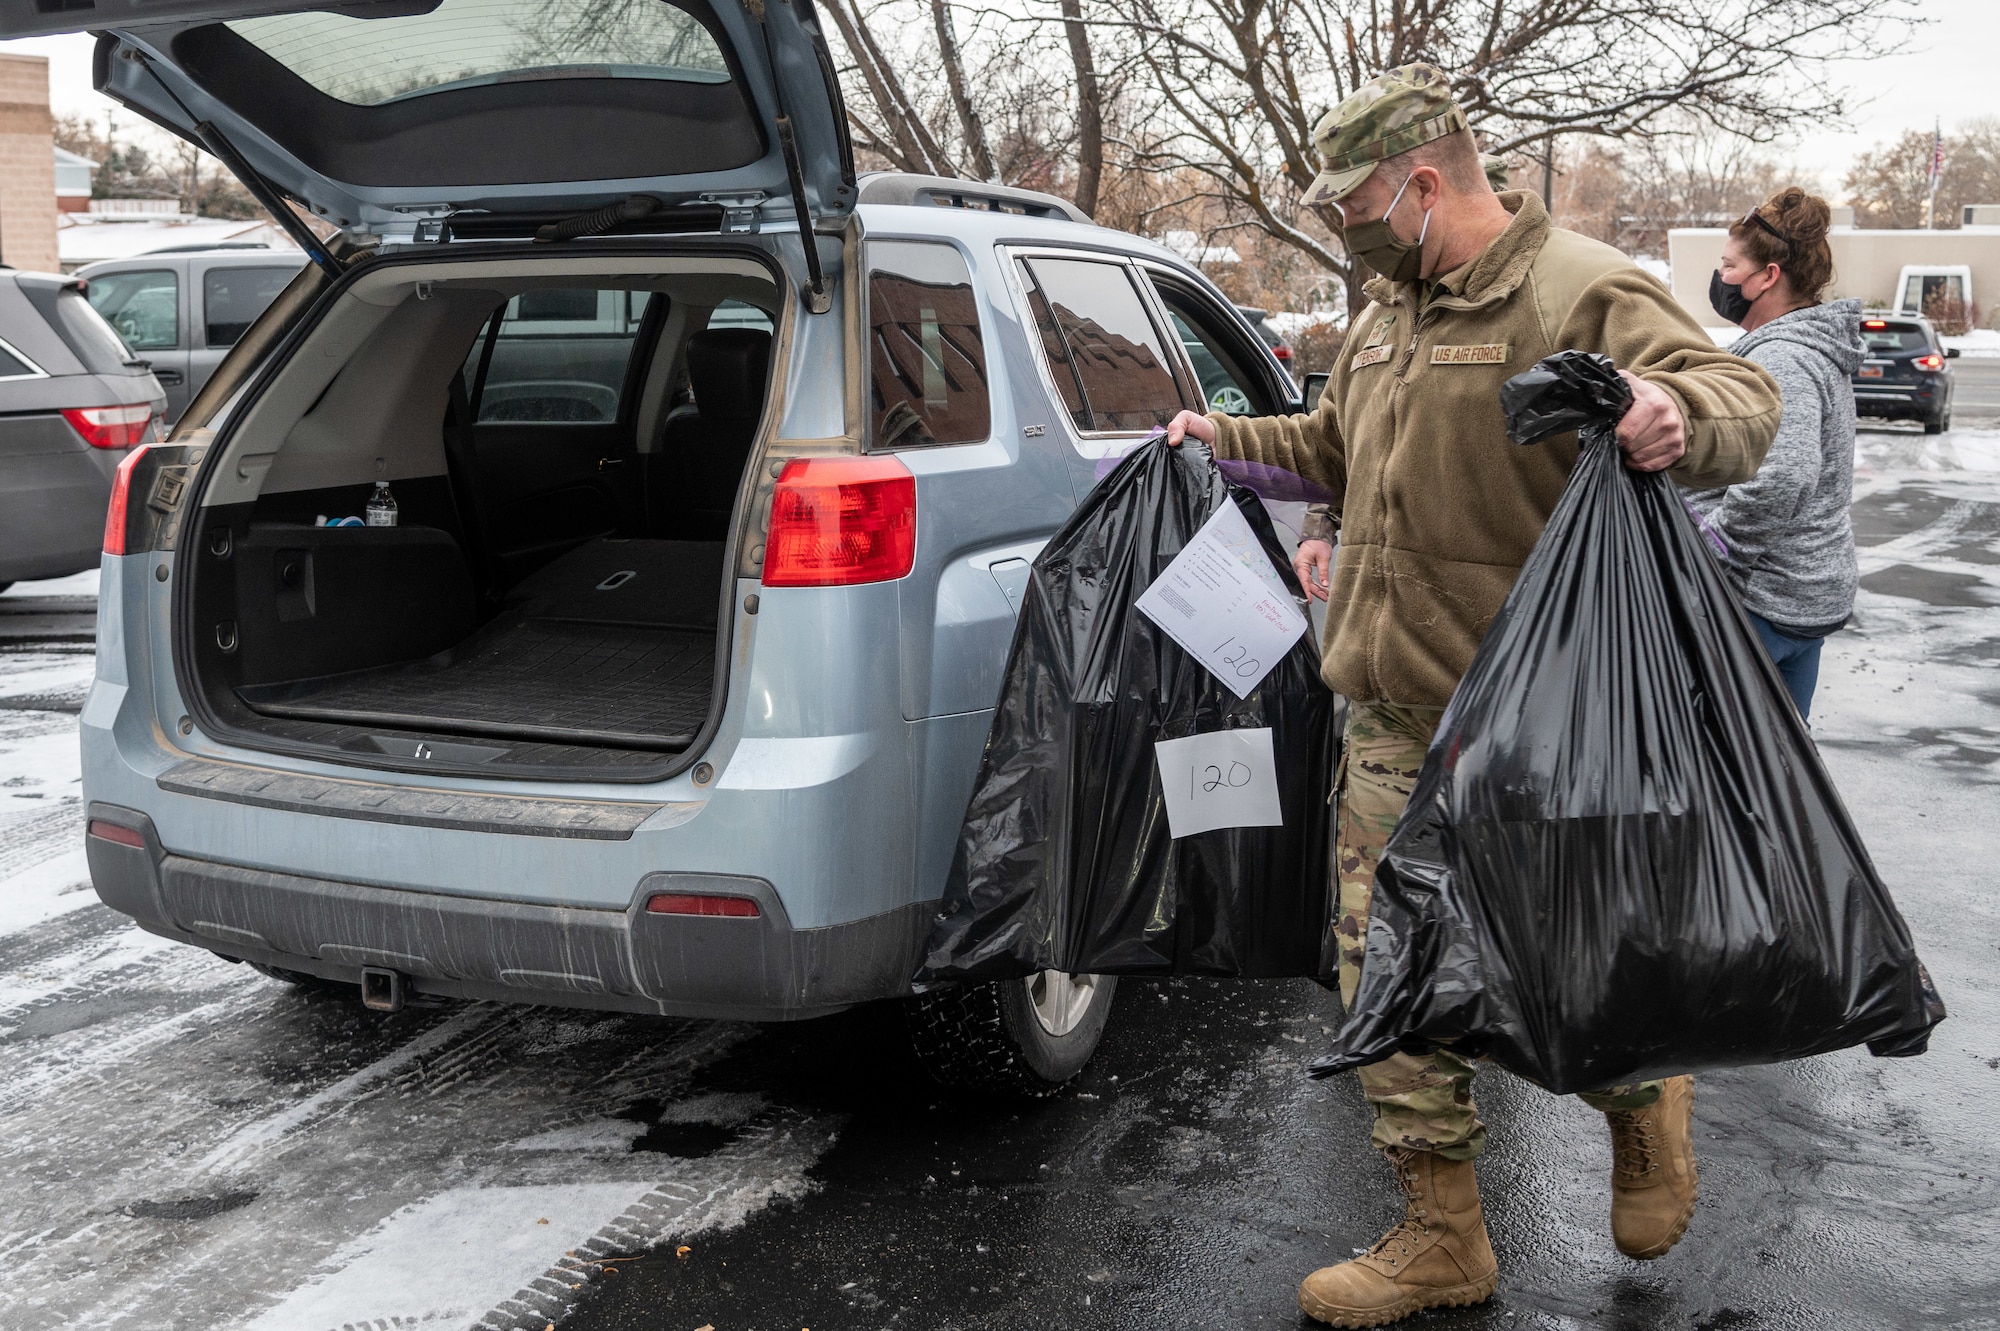 Senior Master Sgt. Drue Titensor, 419th Fighter Wing, loads bags of wrapped gifts into a volunteer's car at Utah Foster Care Foundation in Ogden, Utah, Dec. 17, 2020, as part of a volunteer effort called Santa Brigade